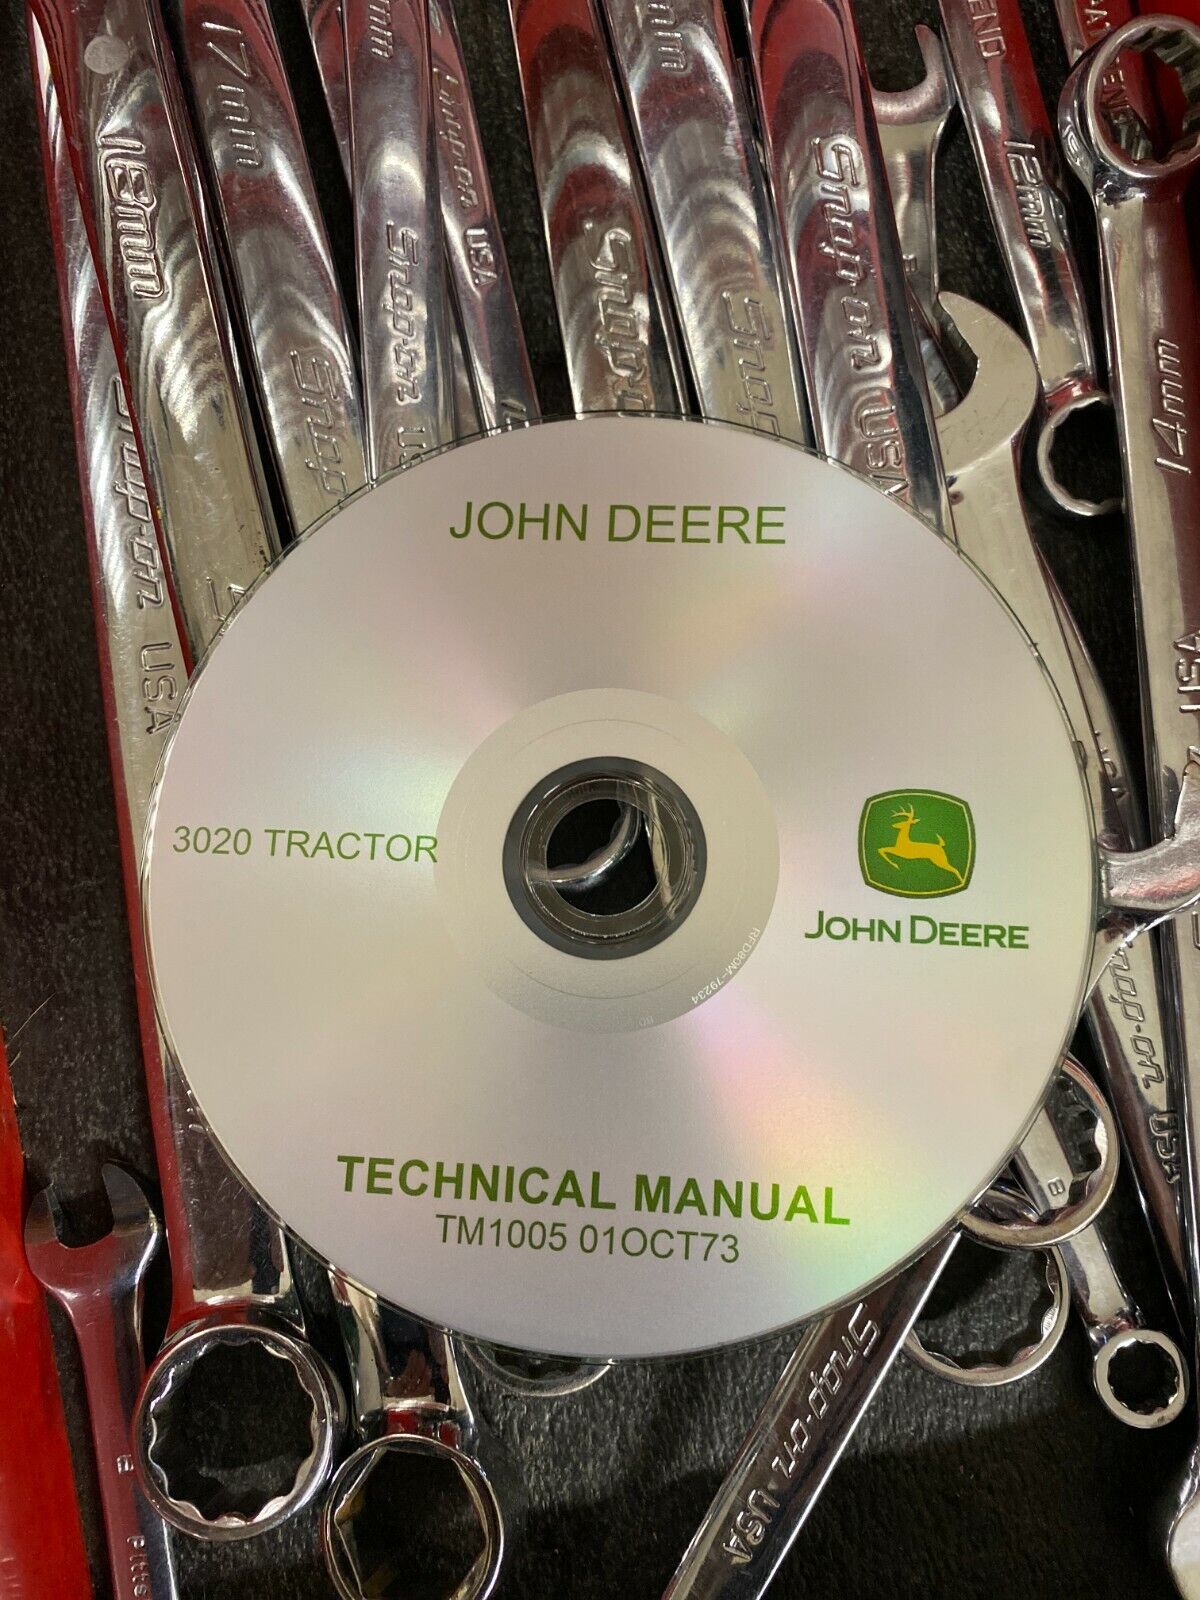 John Deere 3020 Tractor Service Repair Technical Manual TM1005 on CD